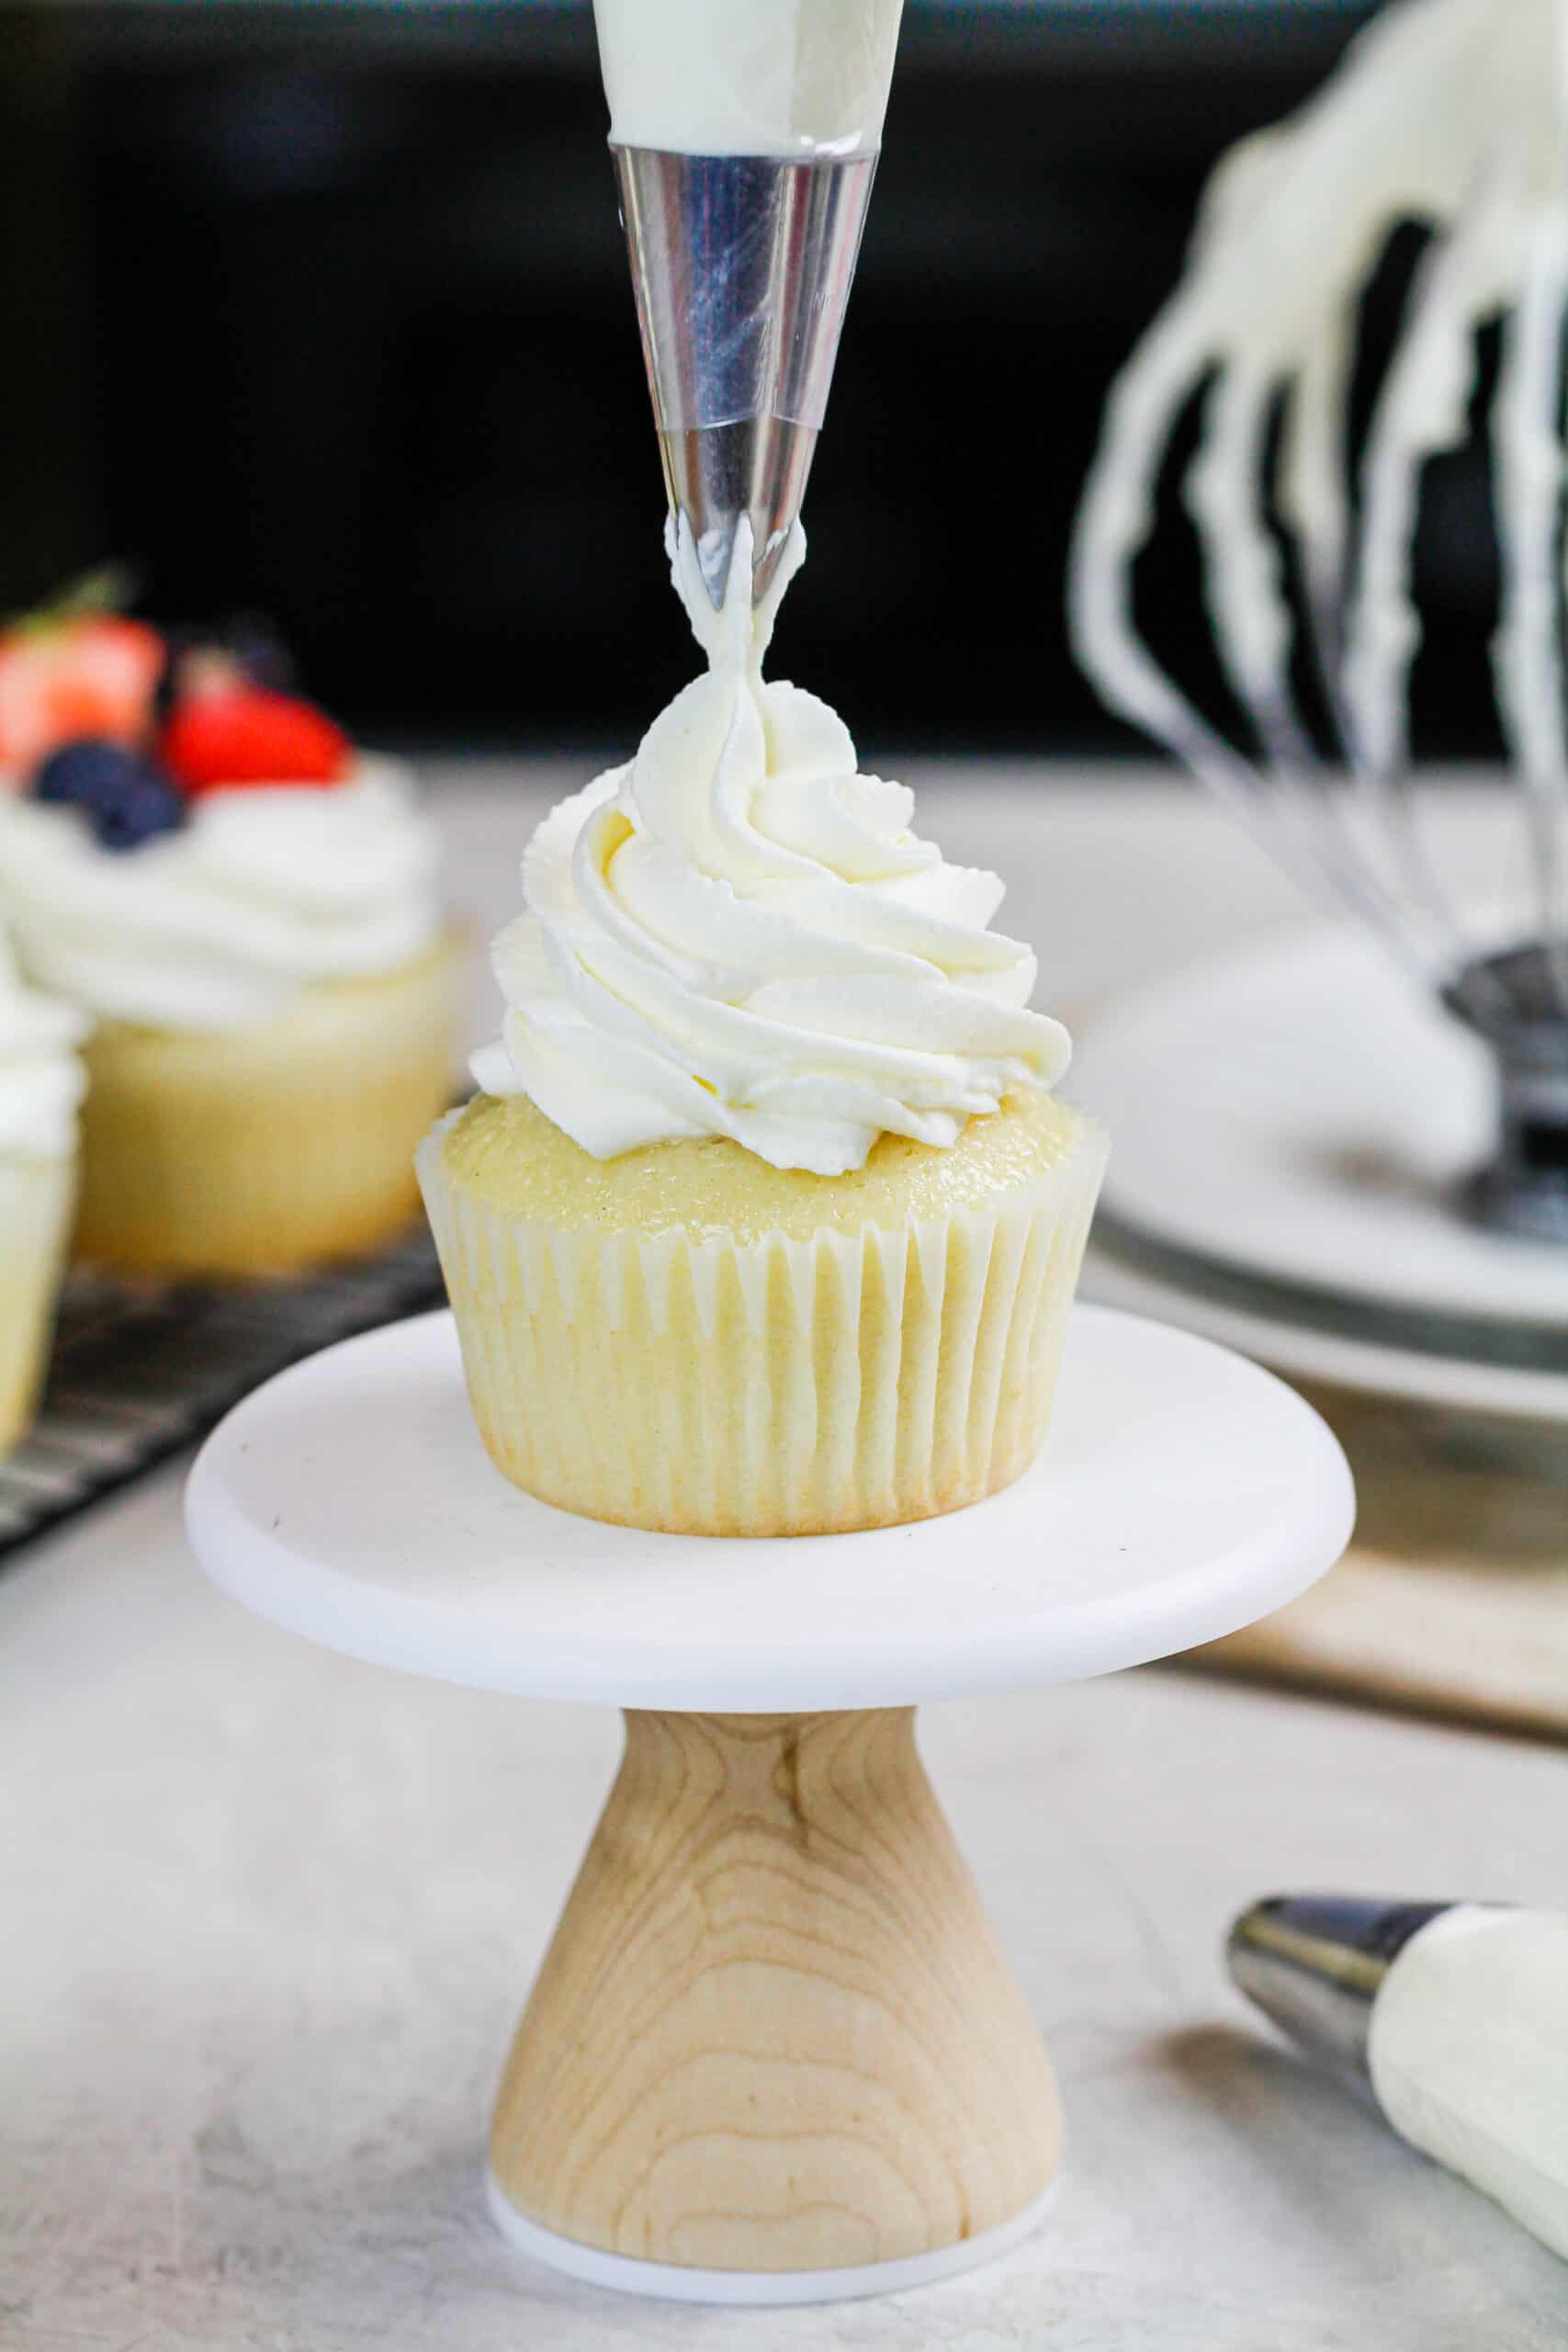 How to bake fresh cream deco cupcake?